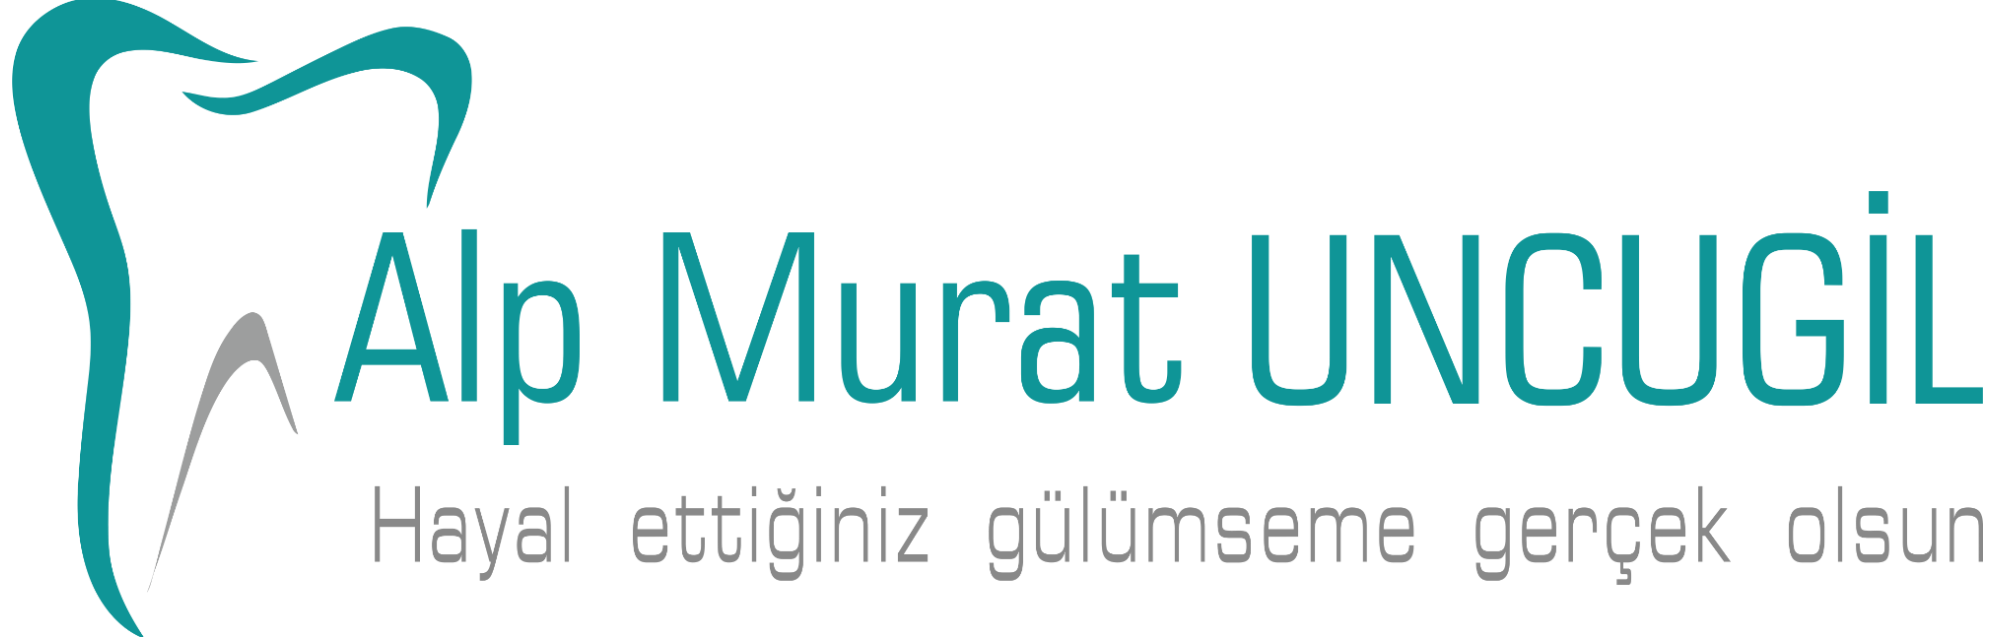 Alp Murat Uncugil